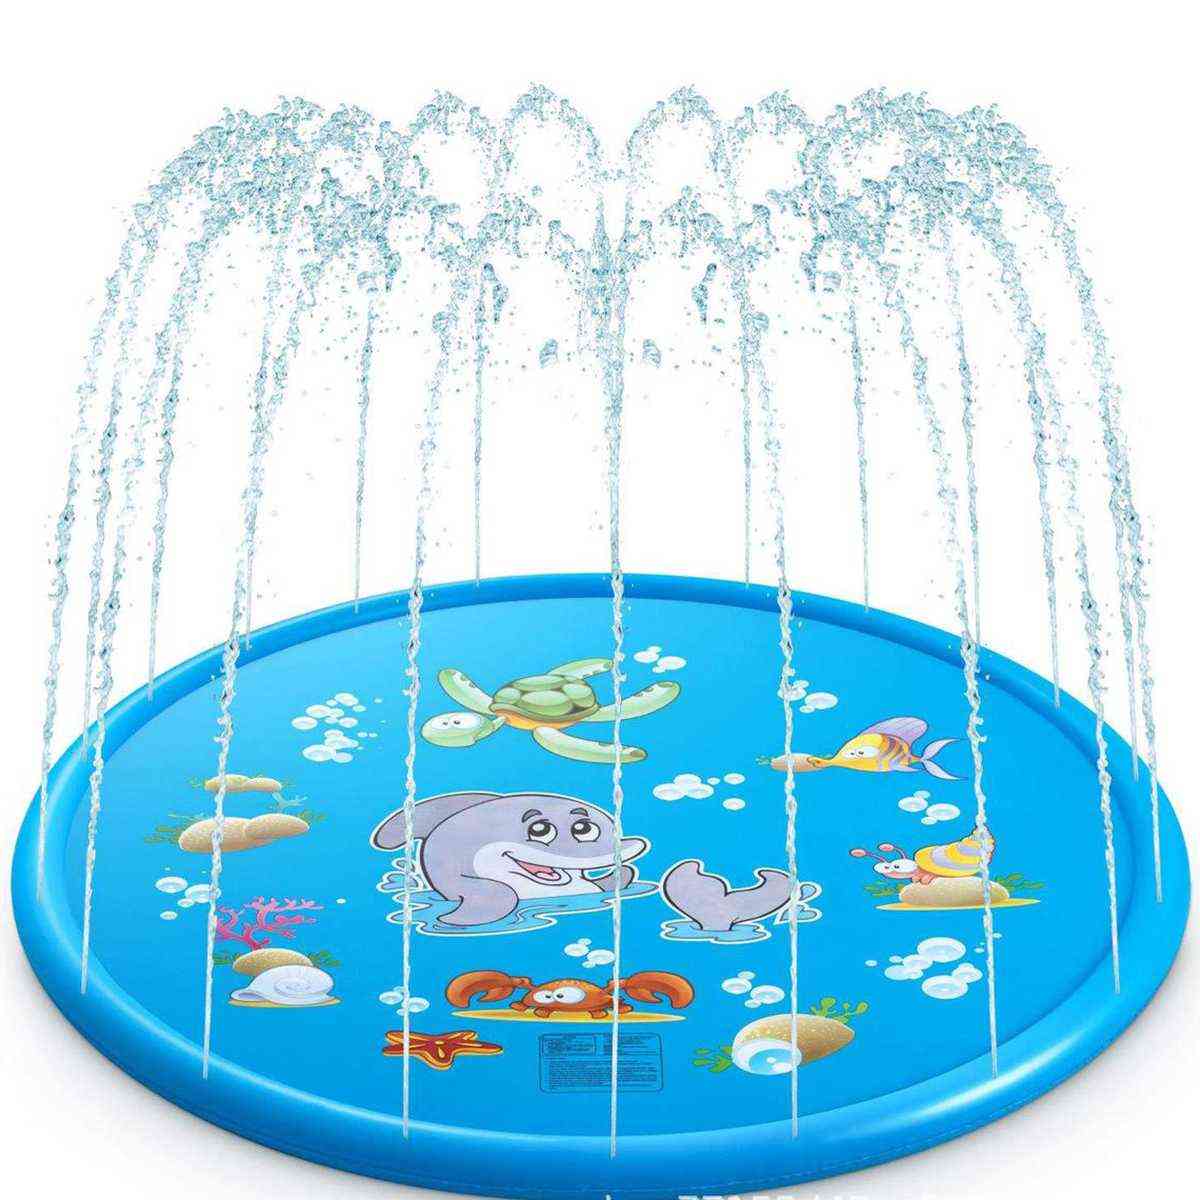 Inflatable Round Water Splash Play Swimming Pools